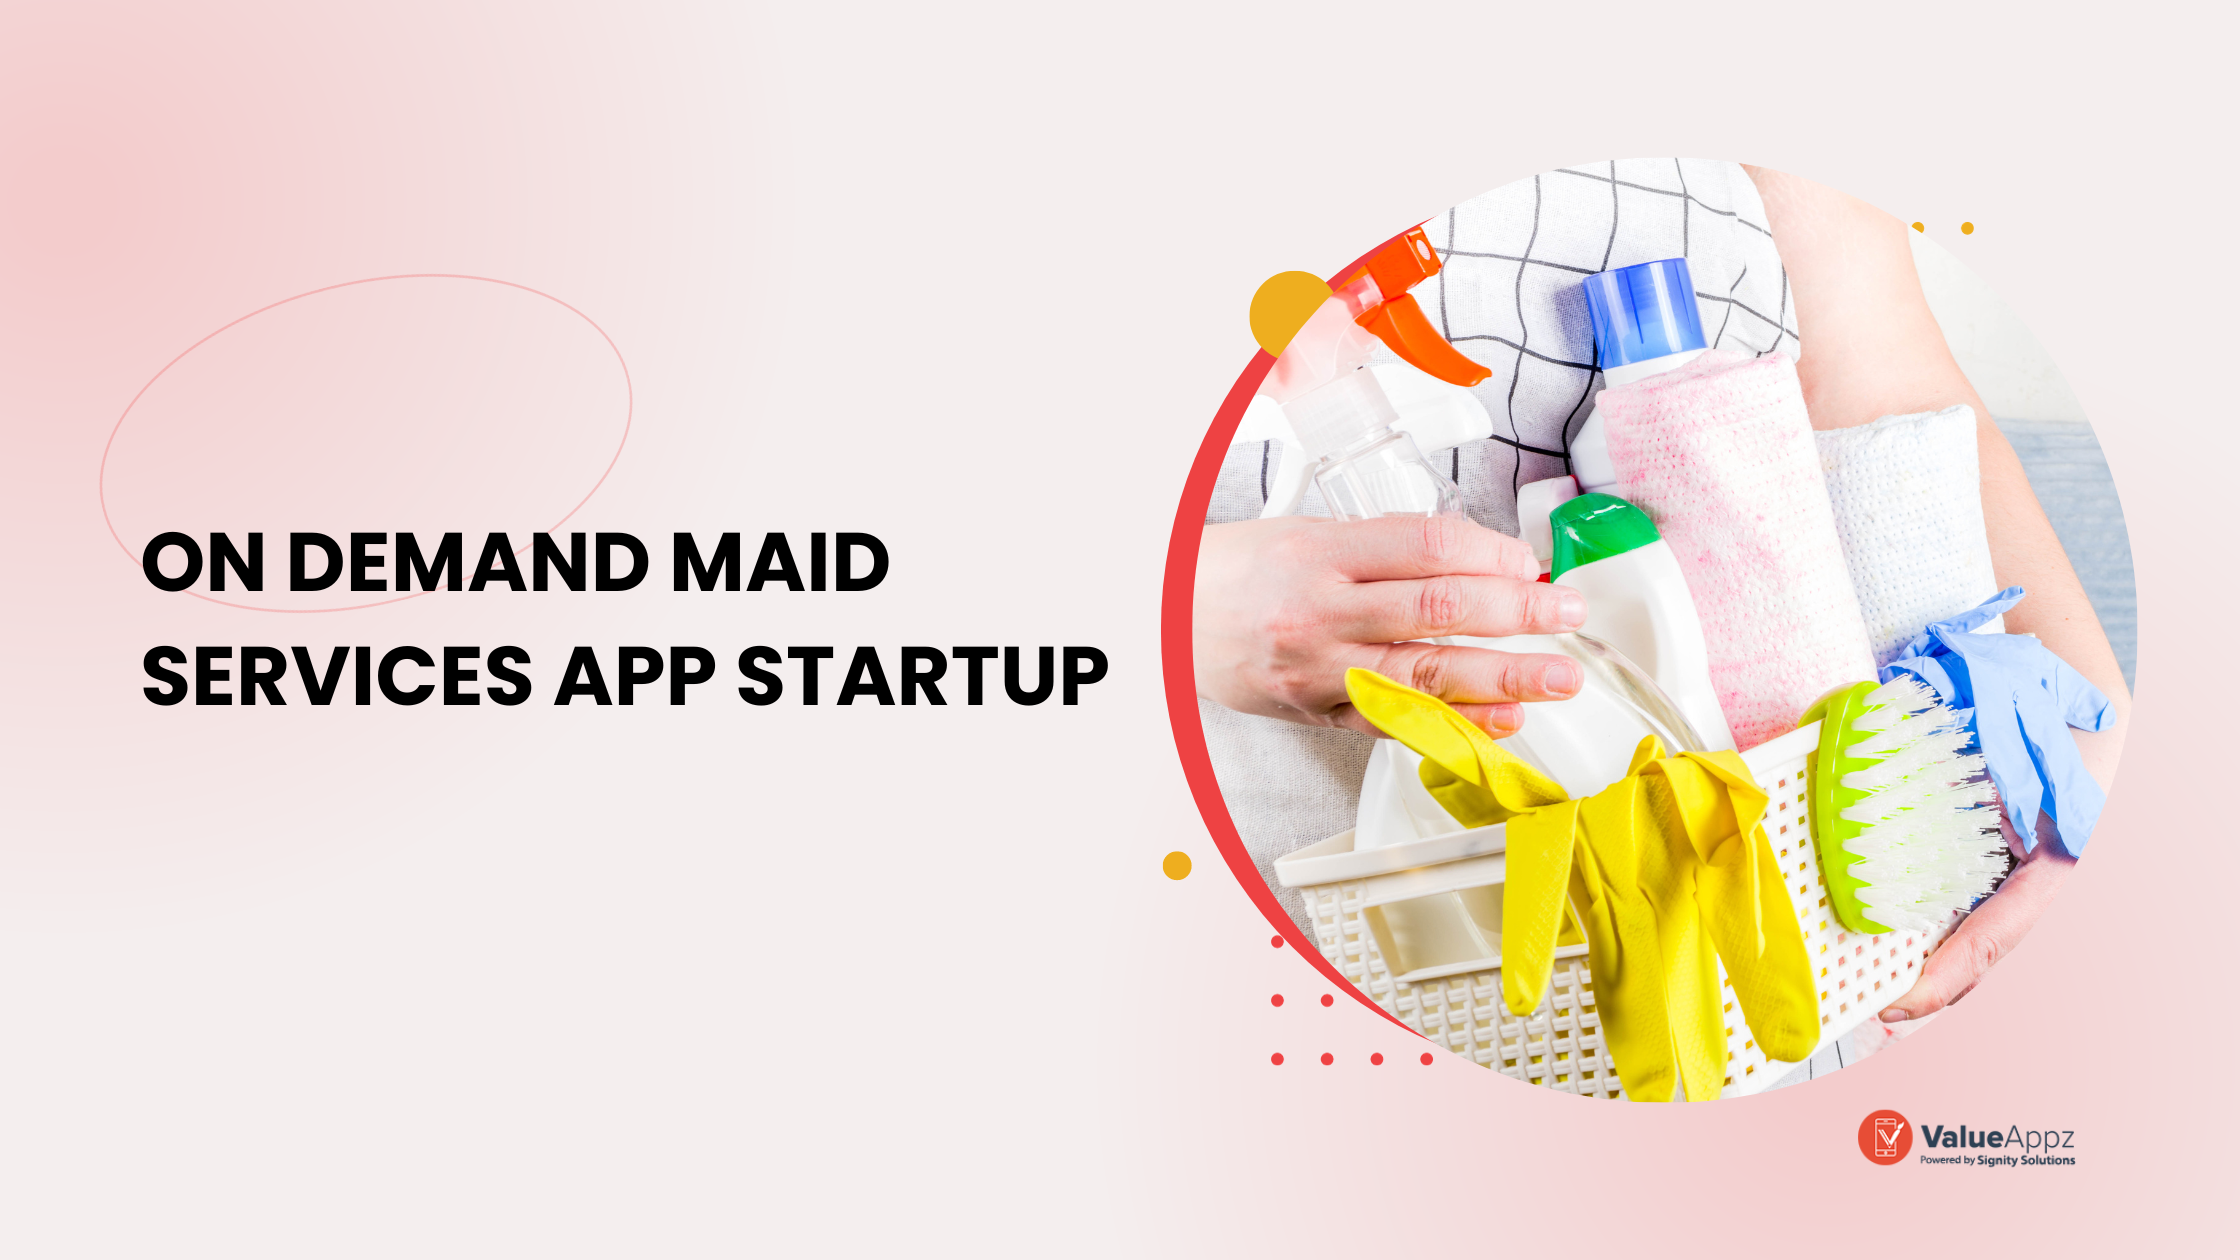 On Demand Maid Services App Startup - ValueAppz